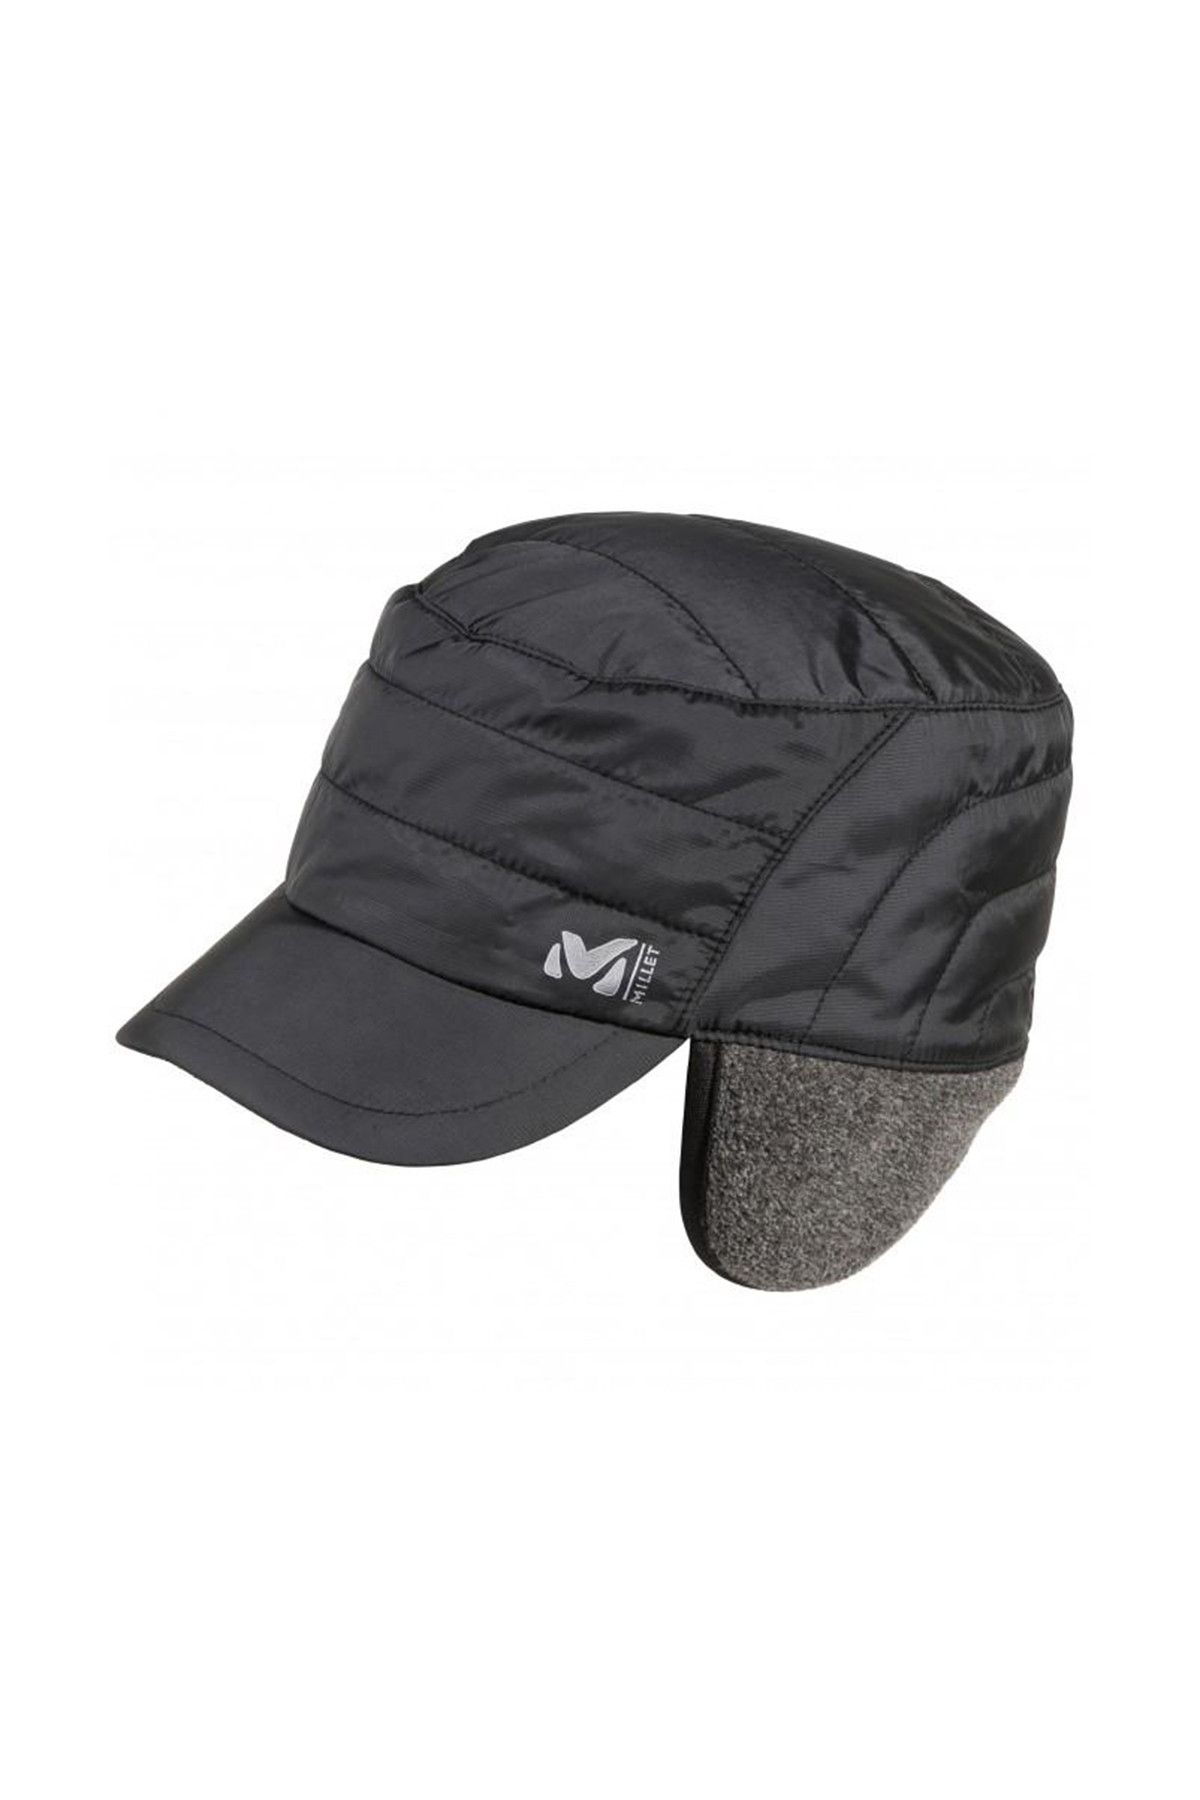 Millet Primaloft Su Geçirmez Kulaklıklı Şapka Miv6220